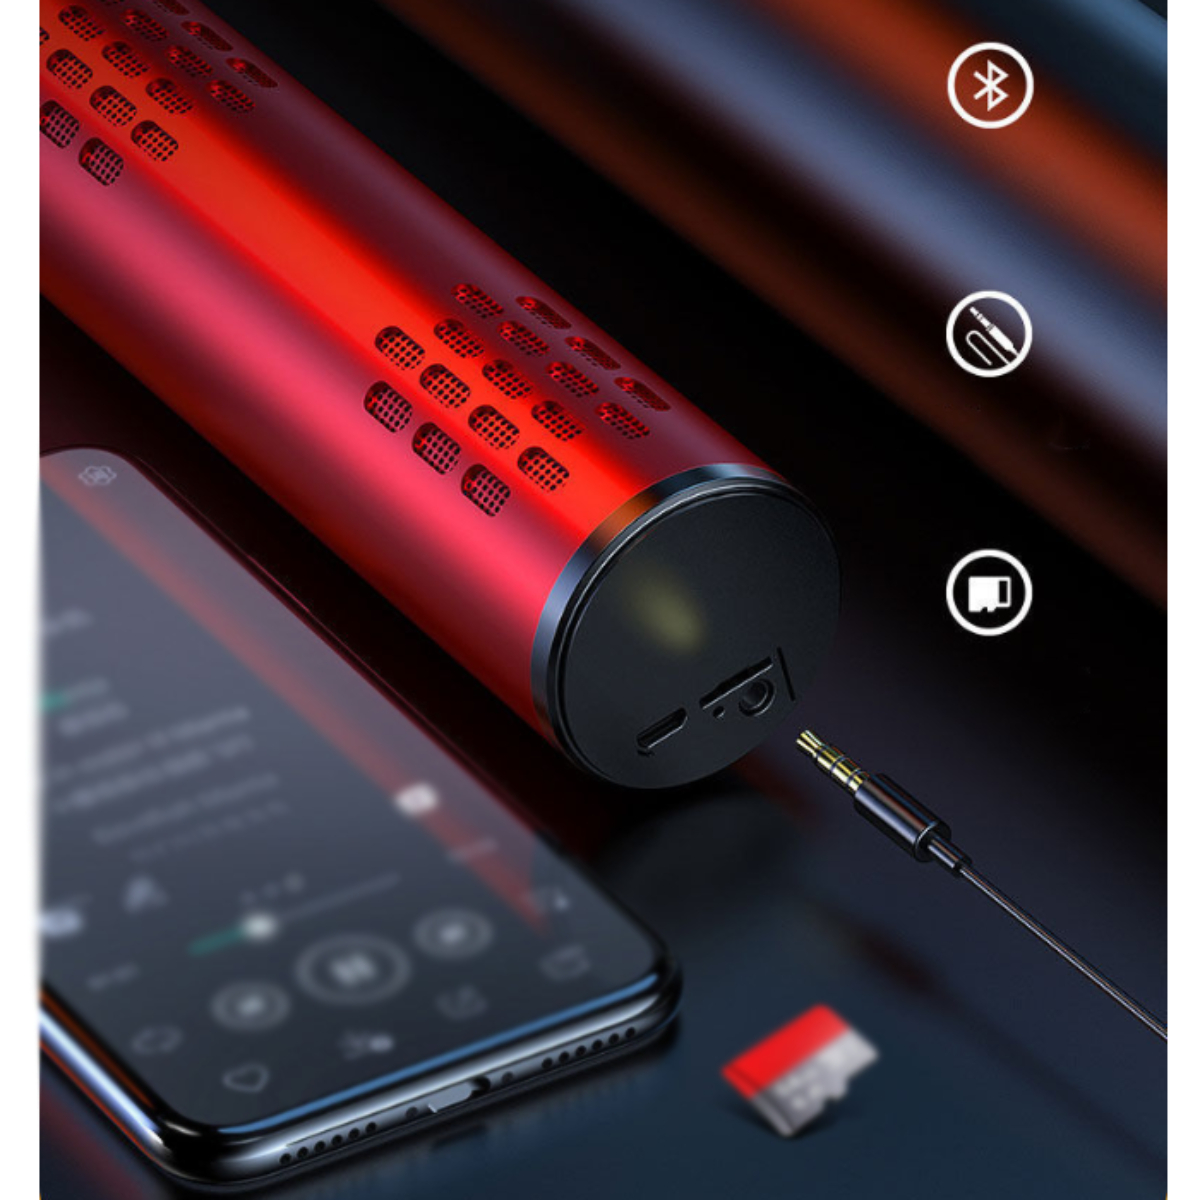 BYTELIKE Kabelloser Bluetooth-Mikrofonlautsprecher mit Doppellautsprechern langer Mikrofone Rot Akkulaufzeit und